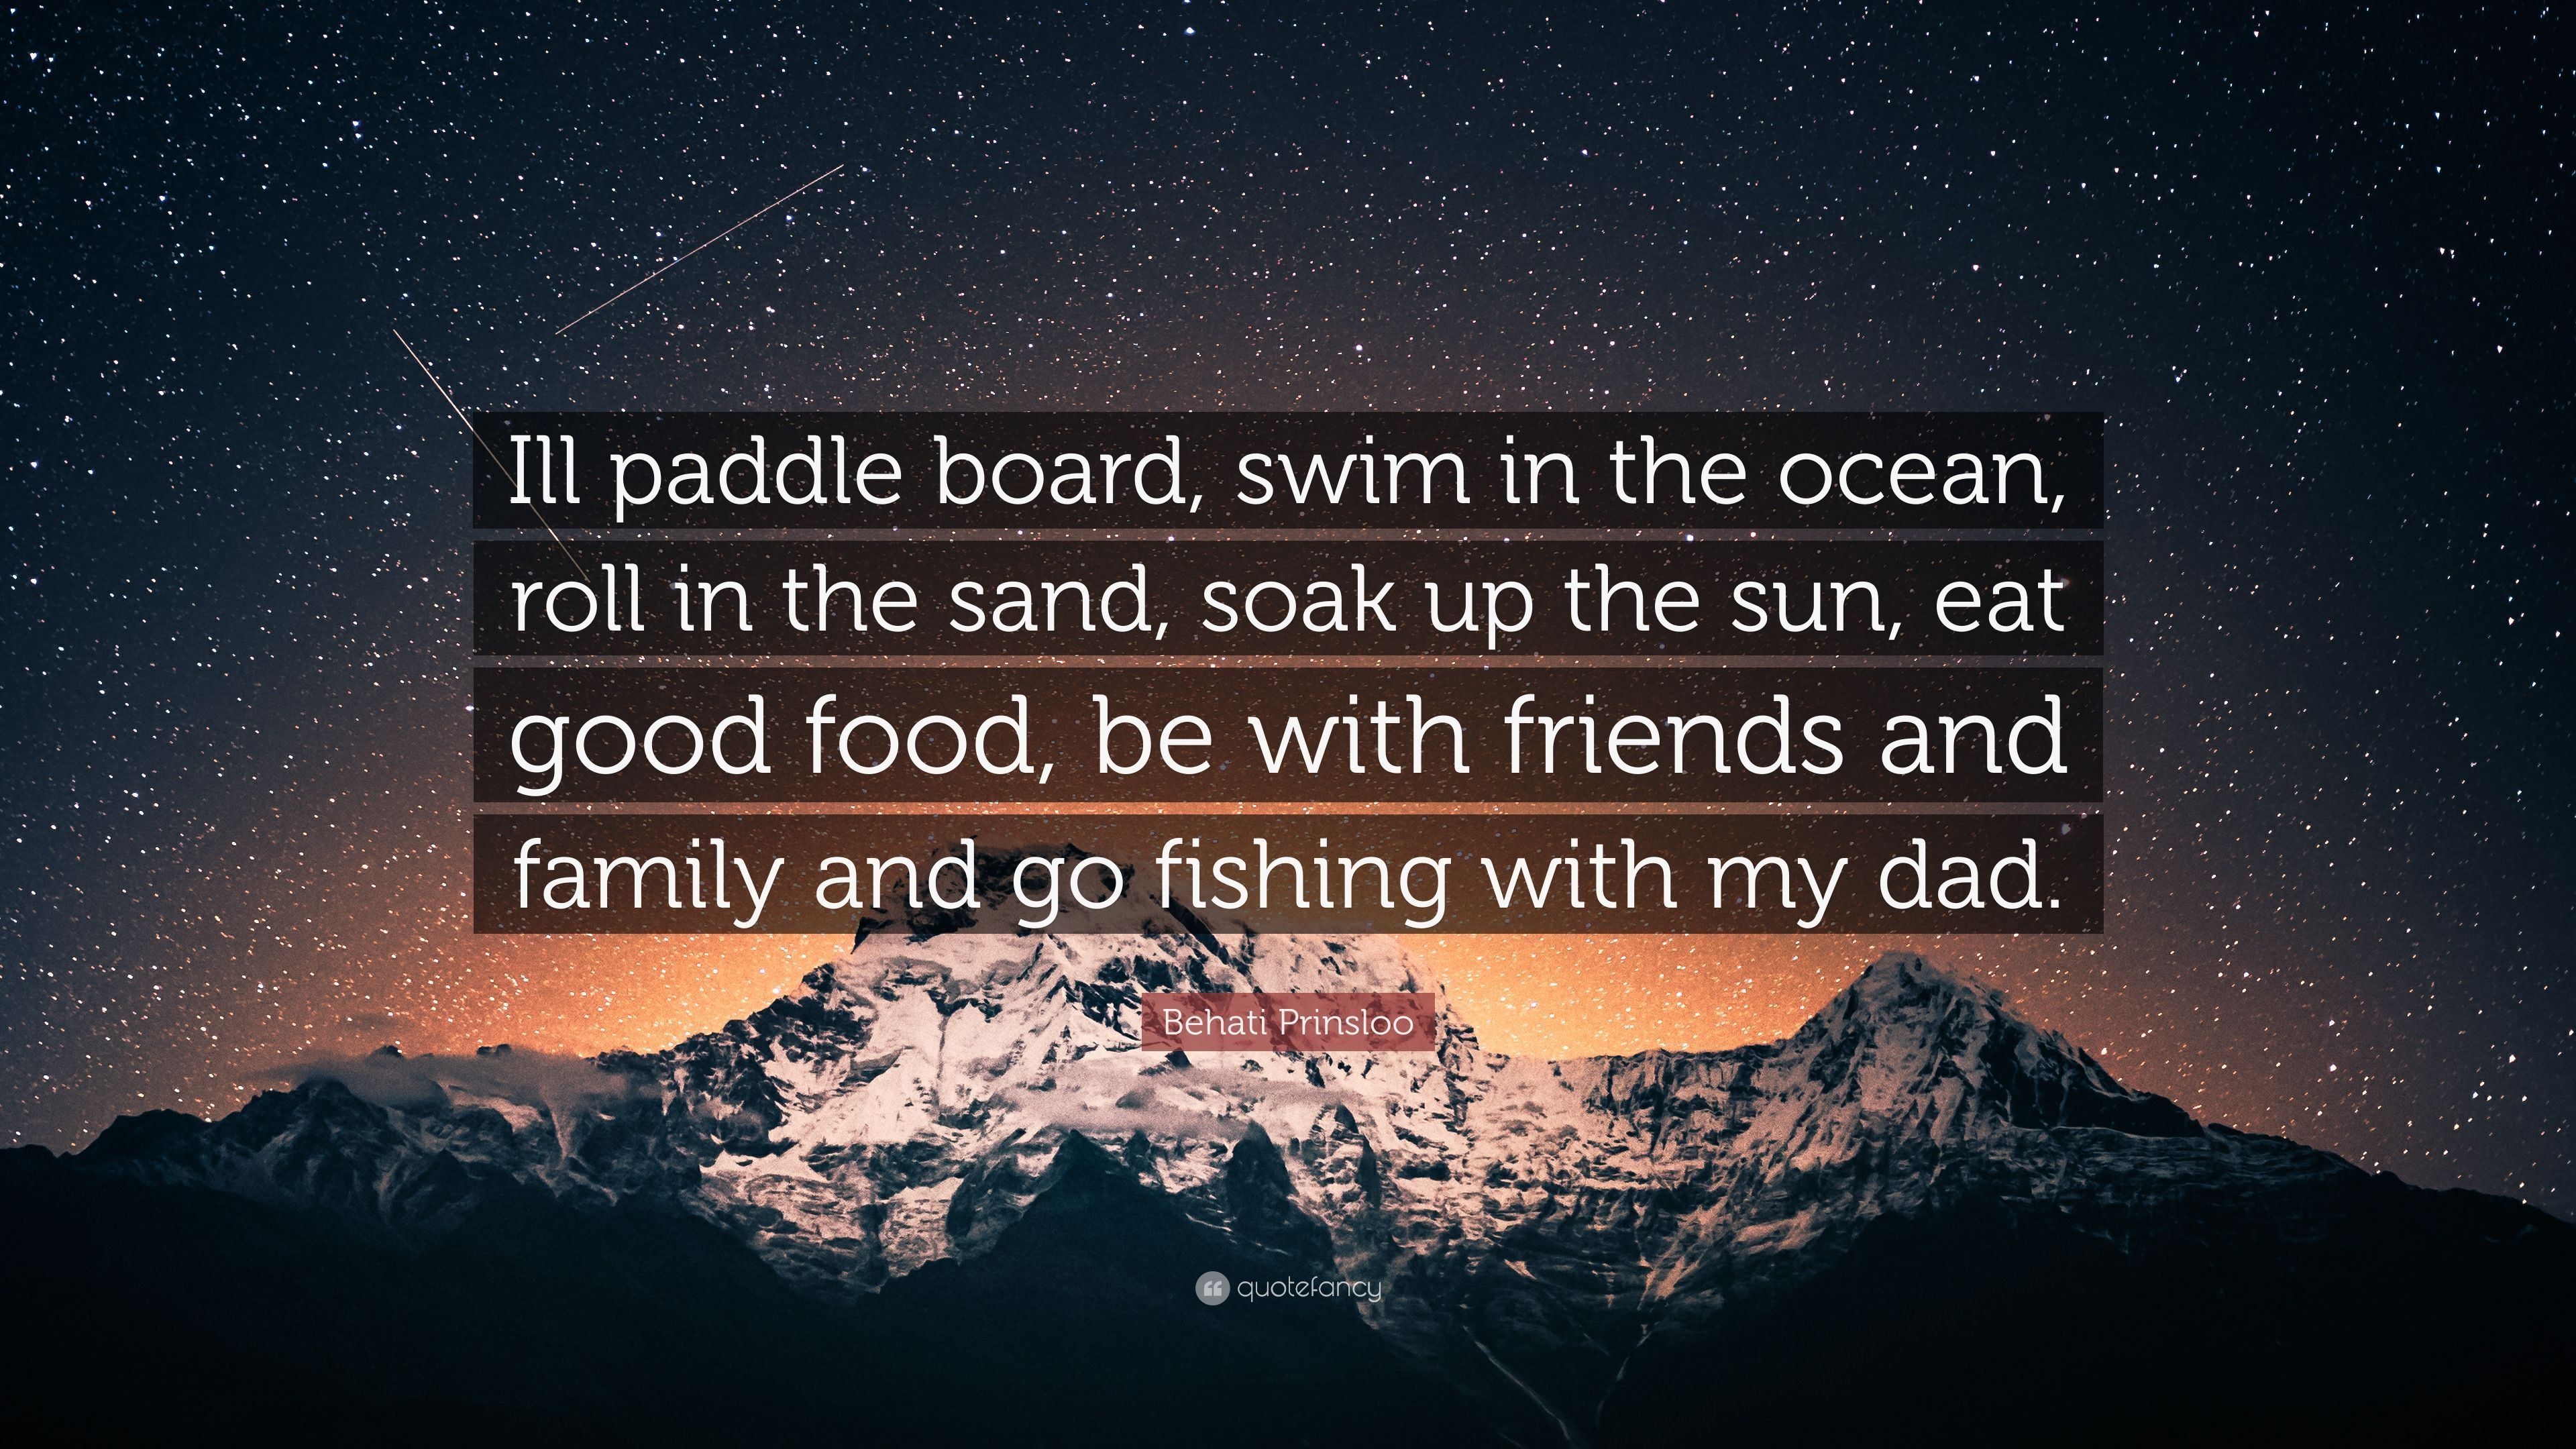 Behati Prinsloo Quote: “Ill paddle board, swim in the ocean, roll